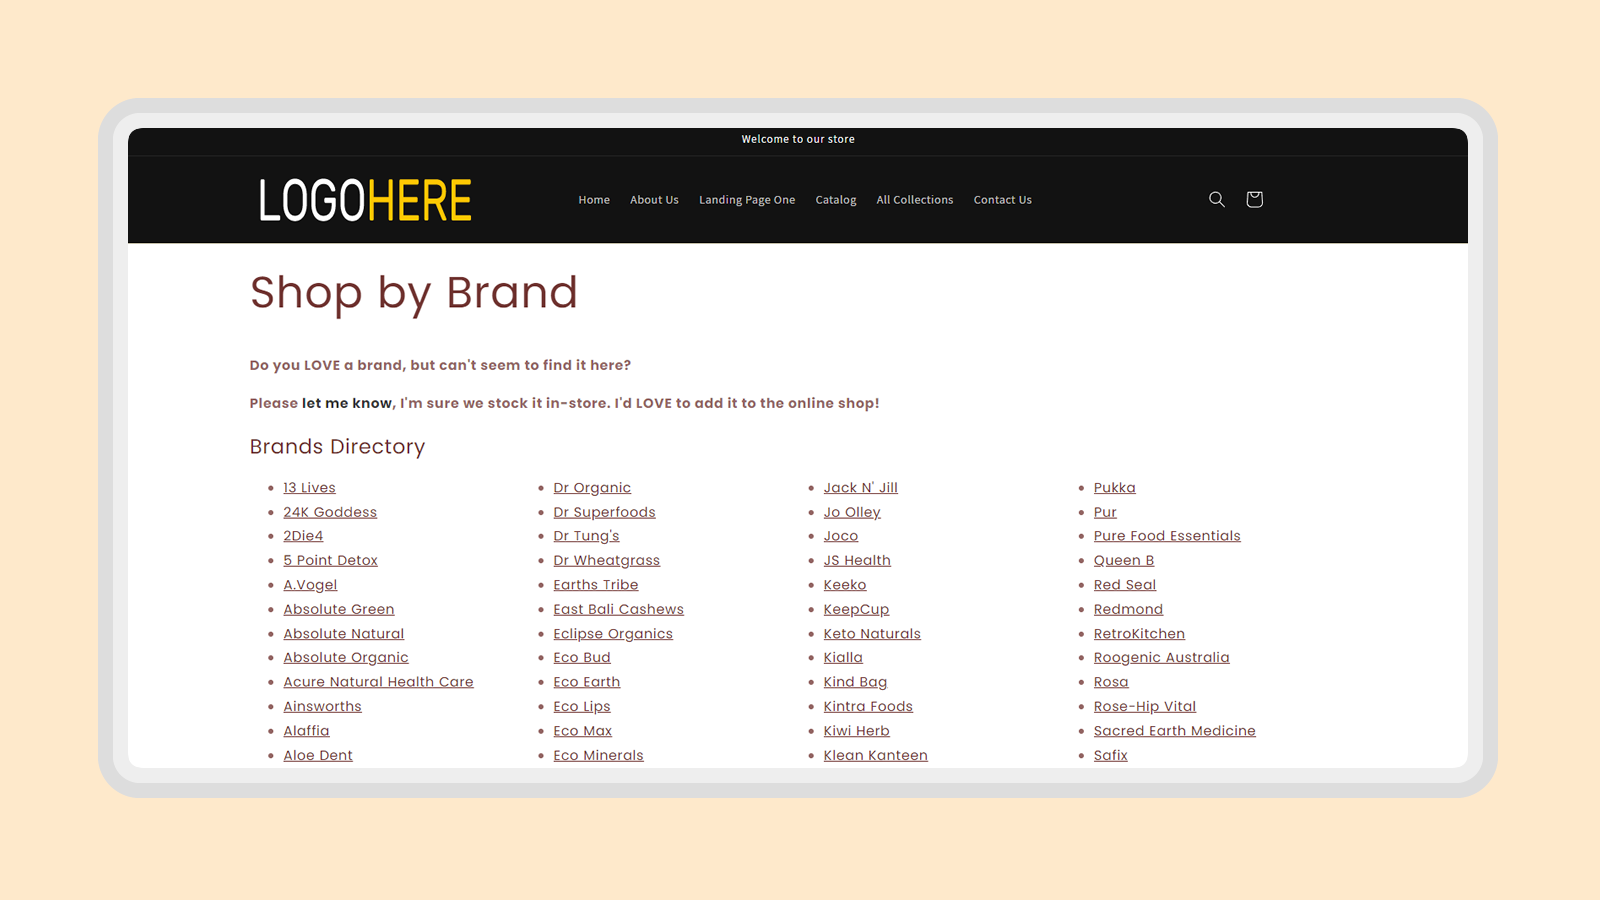 Brands Directory - 4 column